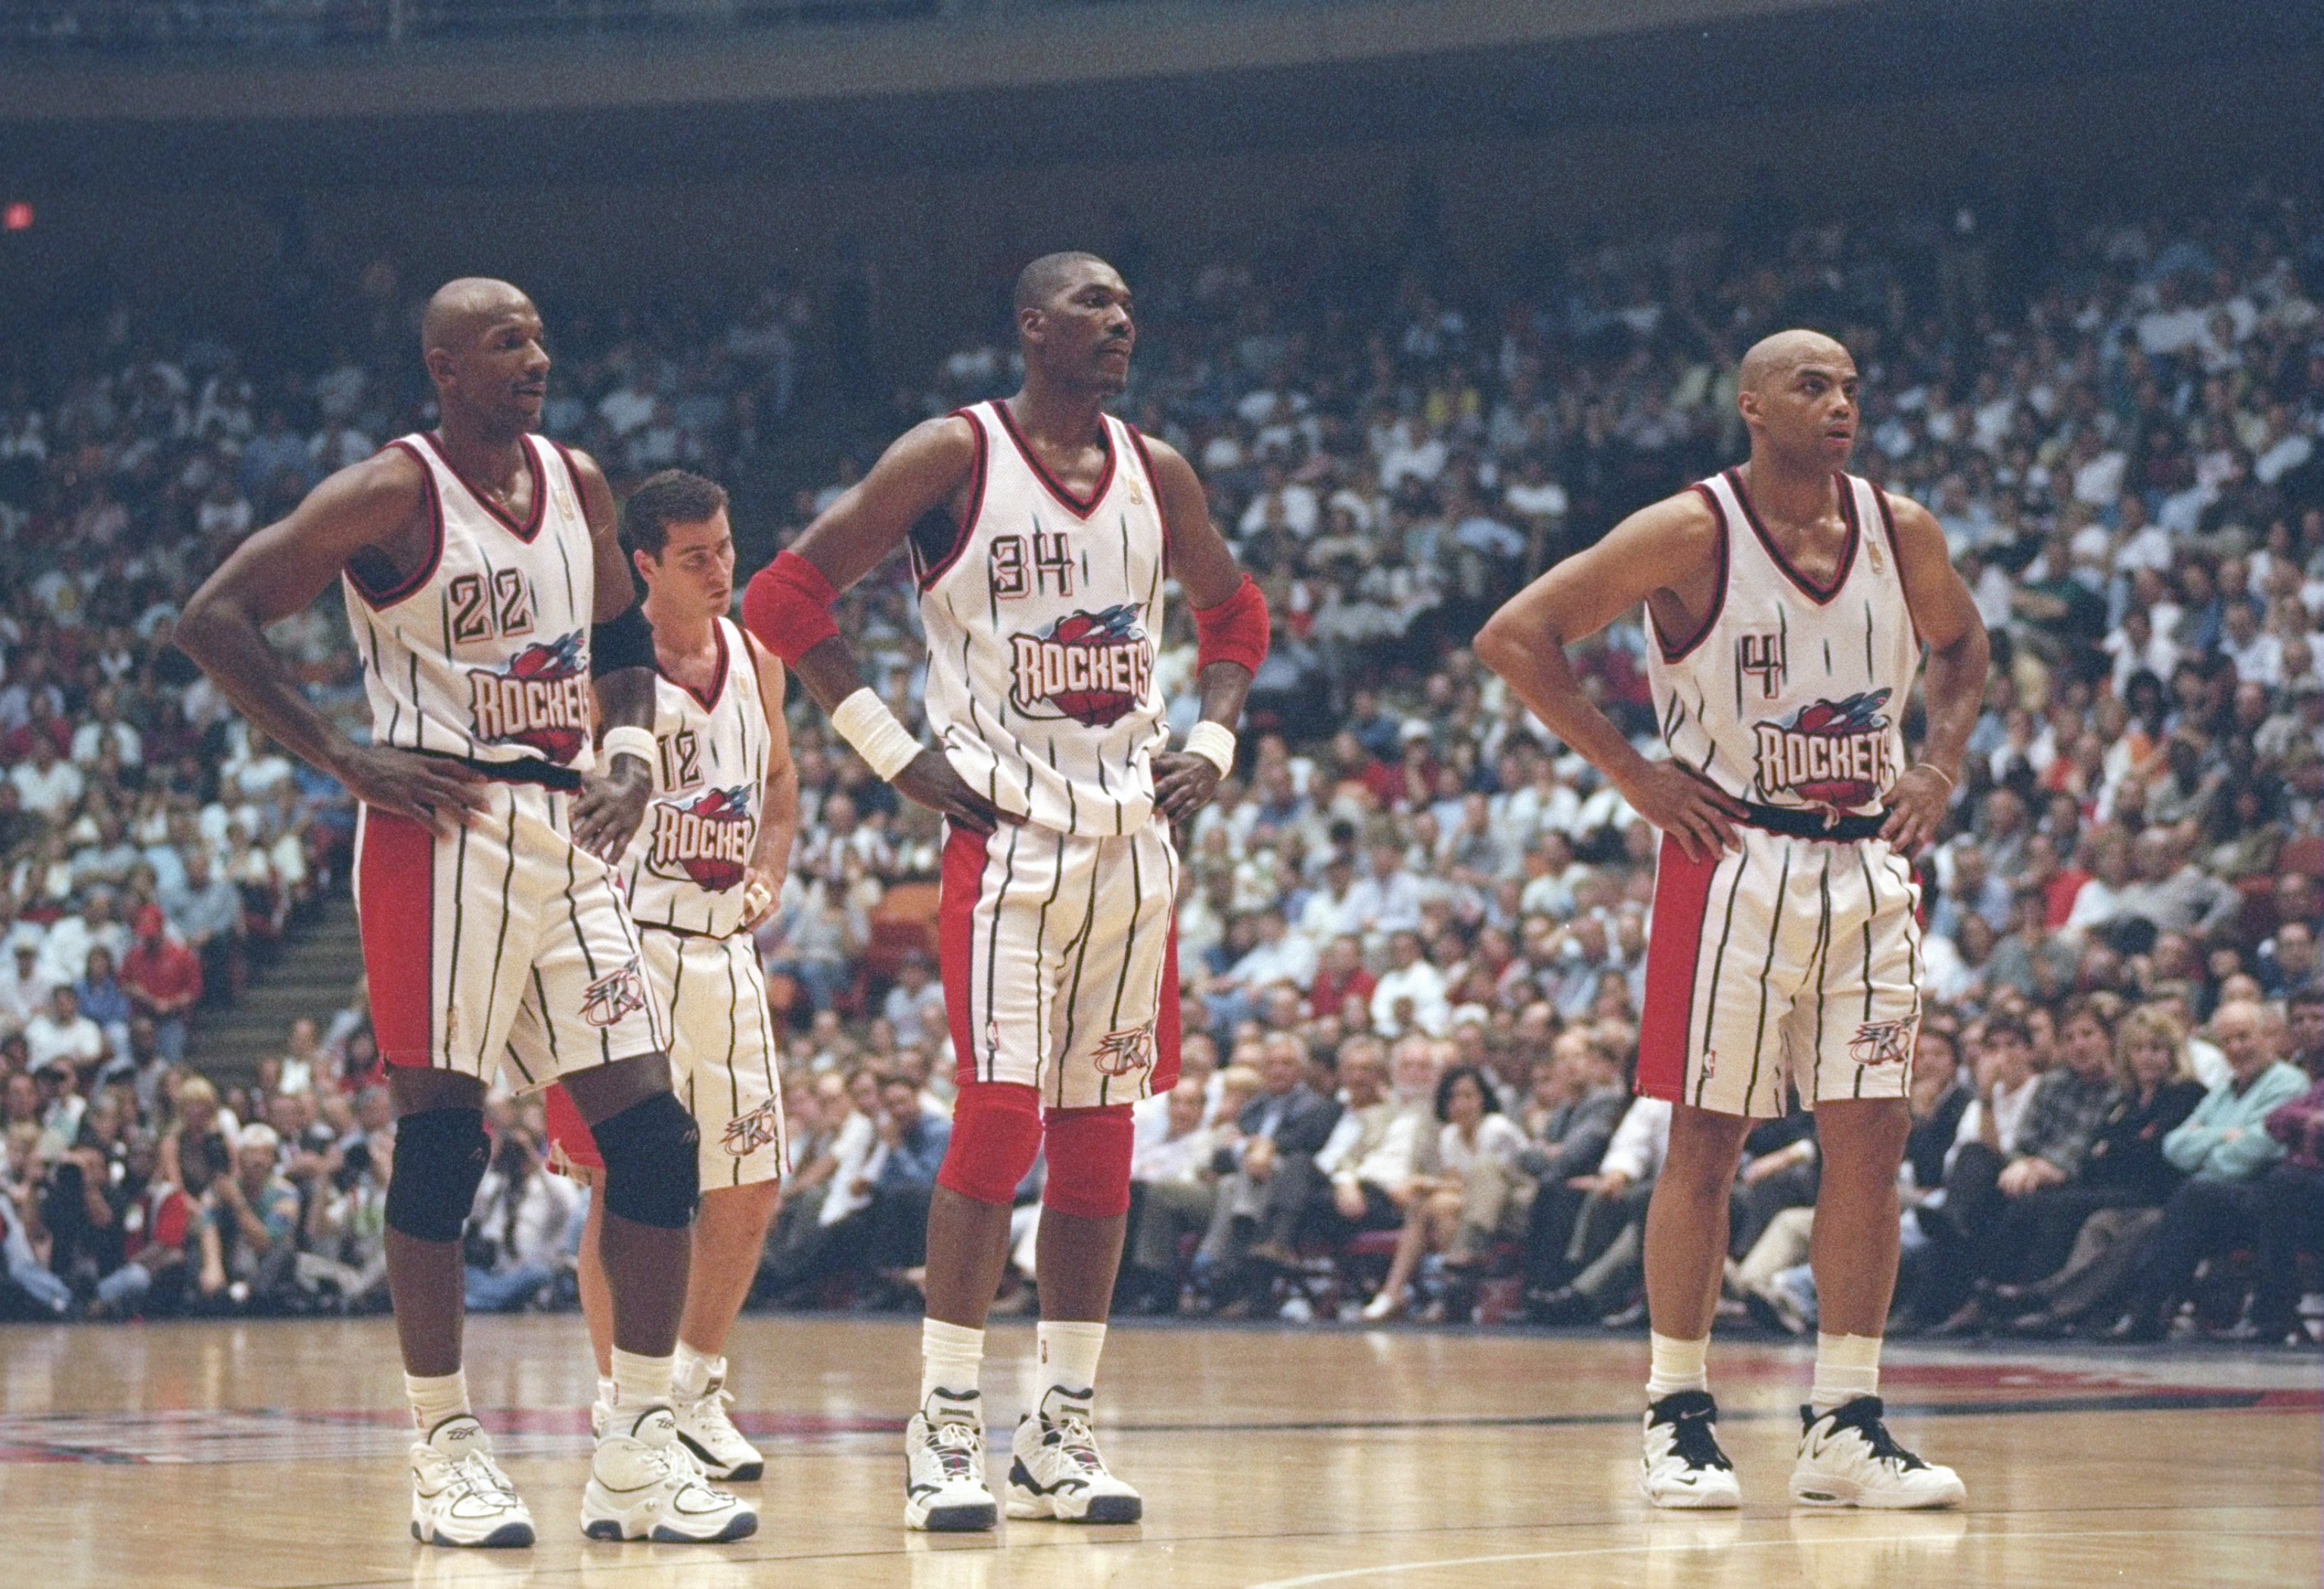 Vintage Houston Rockets Hakeem Olajuwon Jersey 90s Size: 